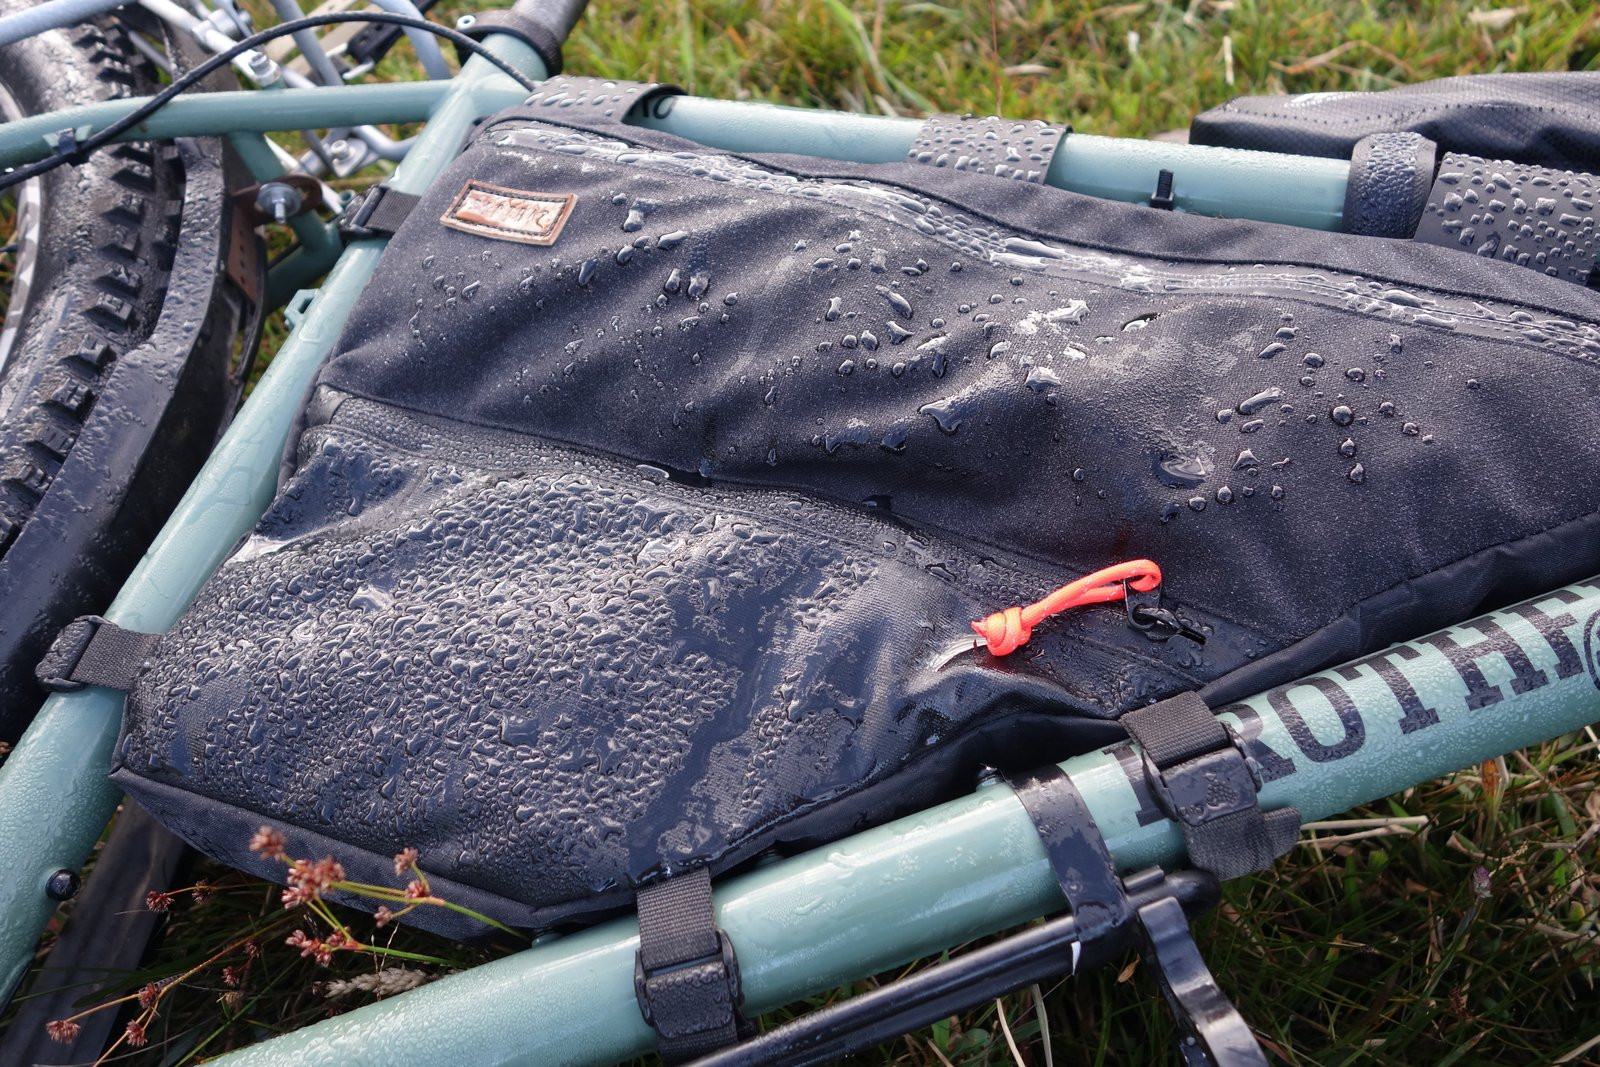 Test : La sacoche Restrap Full Frame Bag voyage à la dure